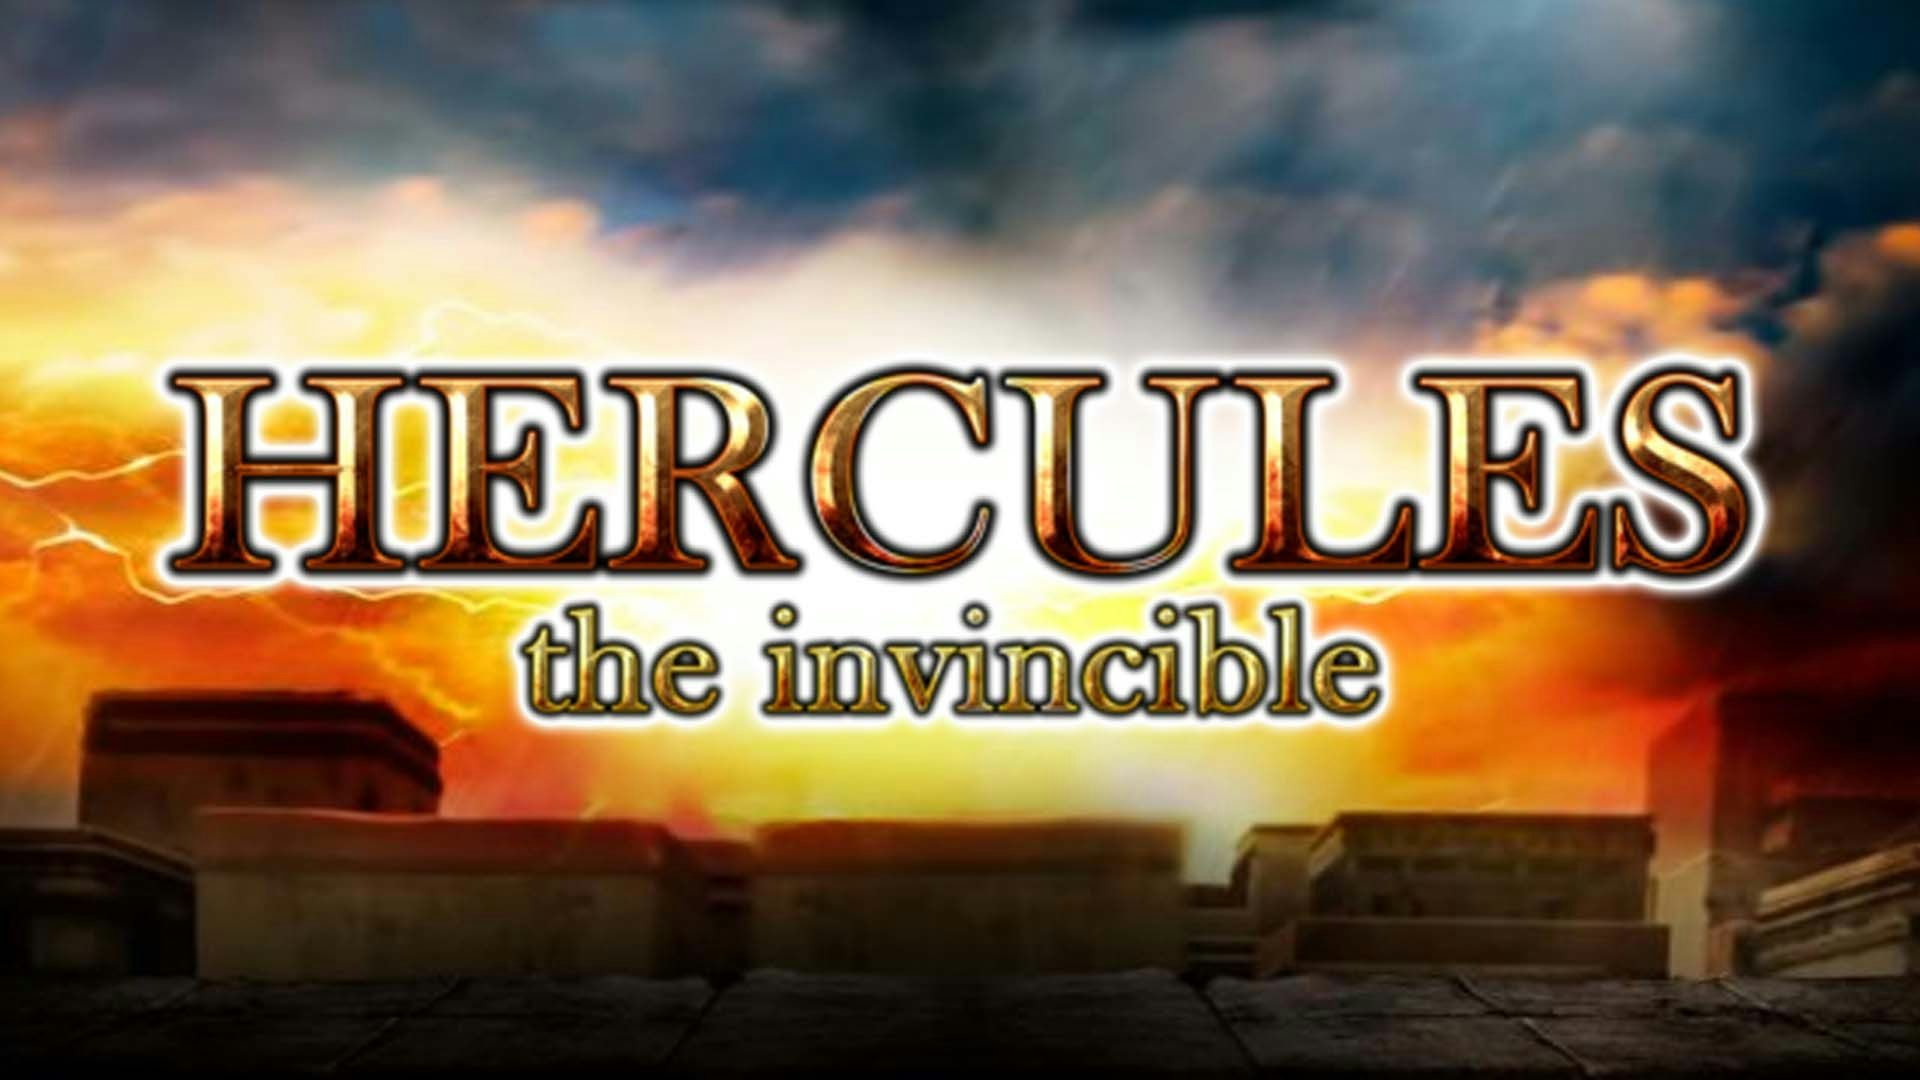 Hercules The Invincible